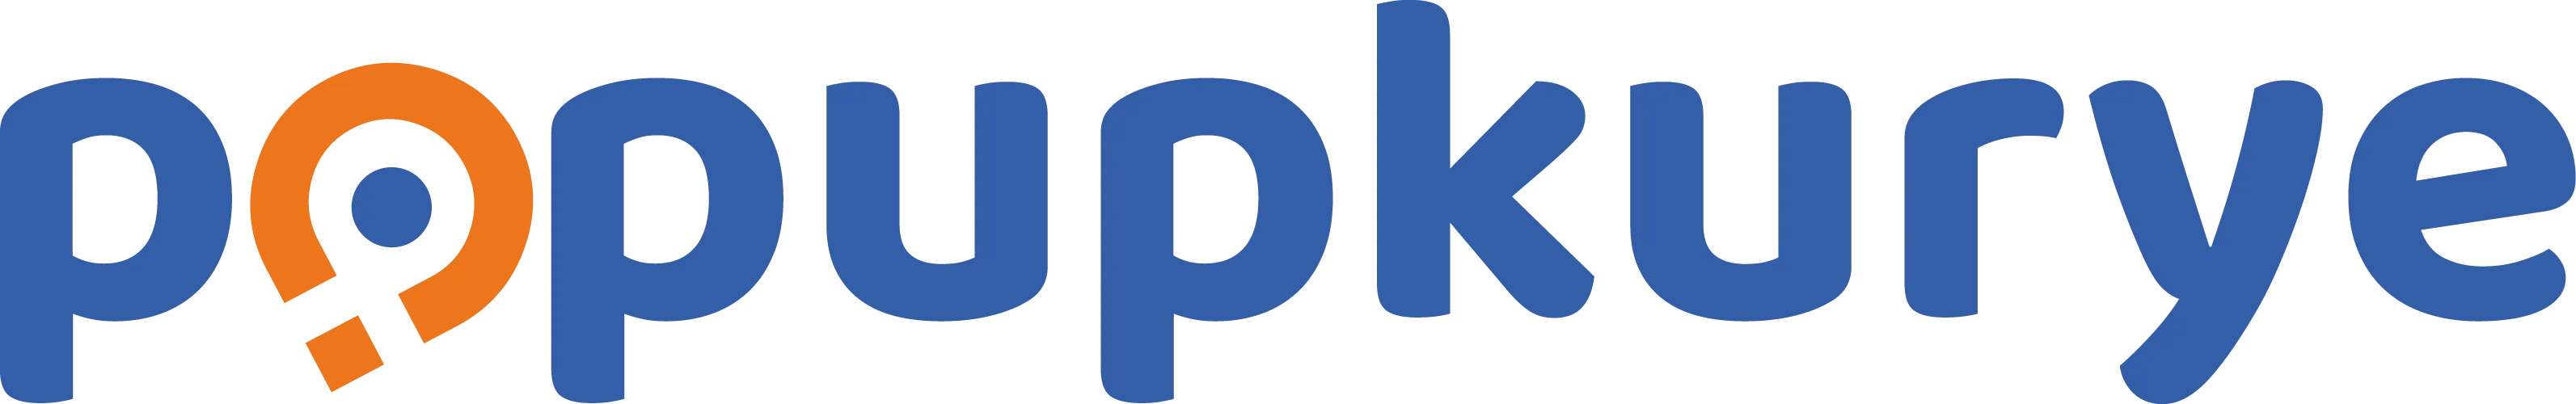 popupkurye logo